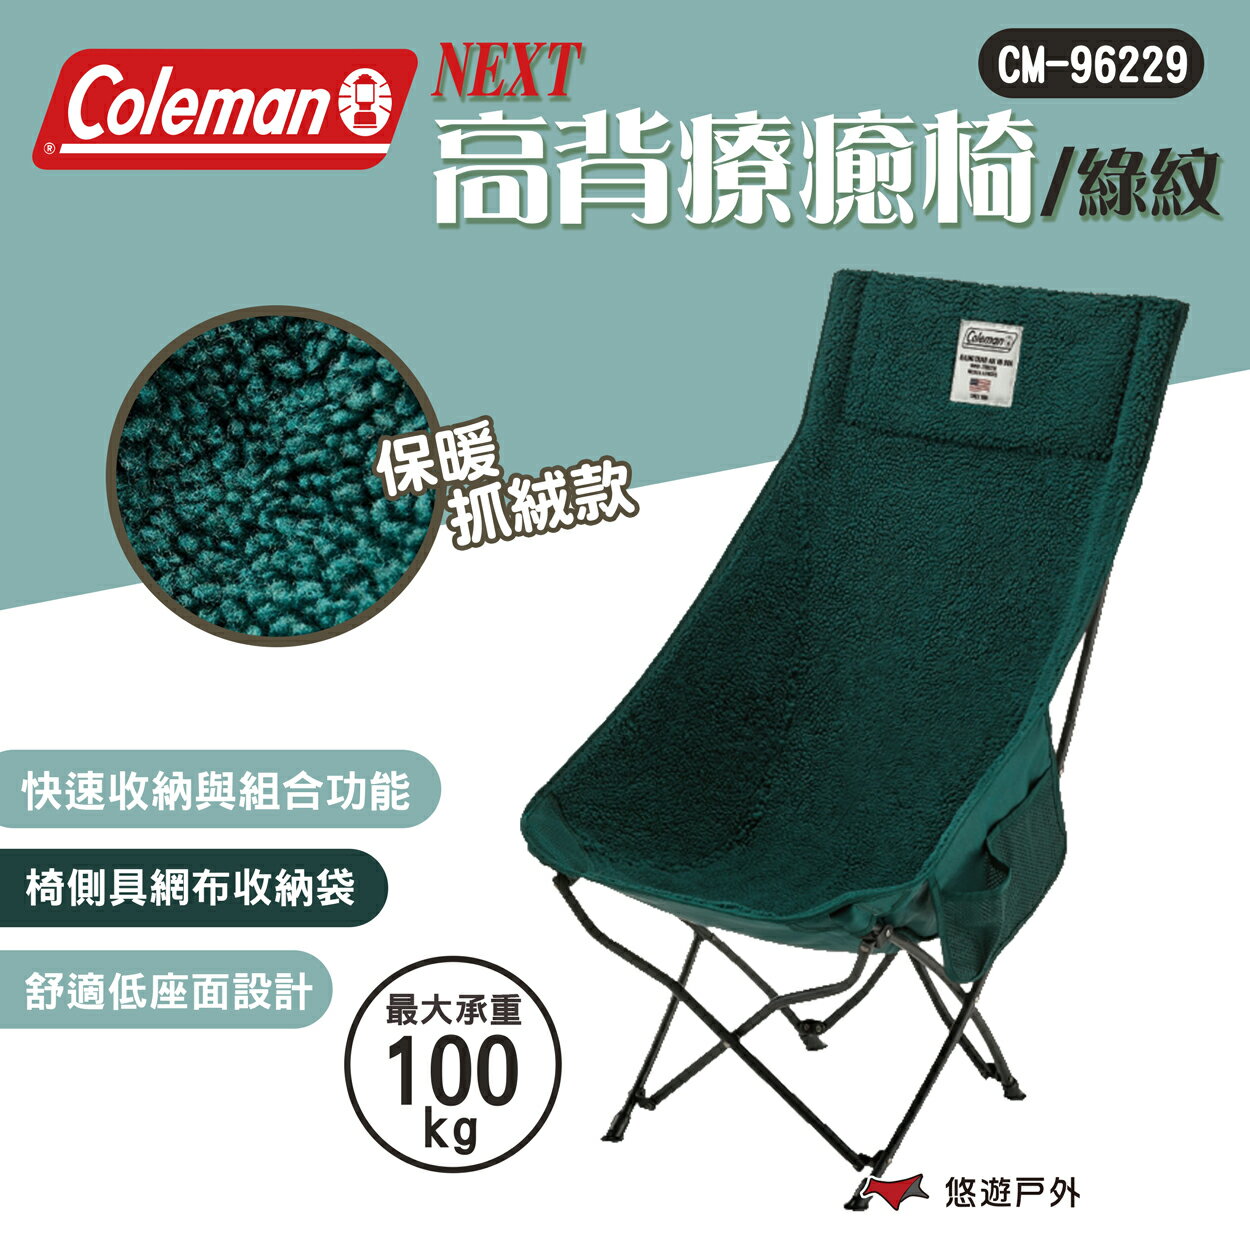 【Coleman】NEXT高背療癒椅/綠紋 CM-96229 露營椅 高背椅 摺疊椅 露營 悠遊戶外